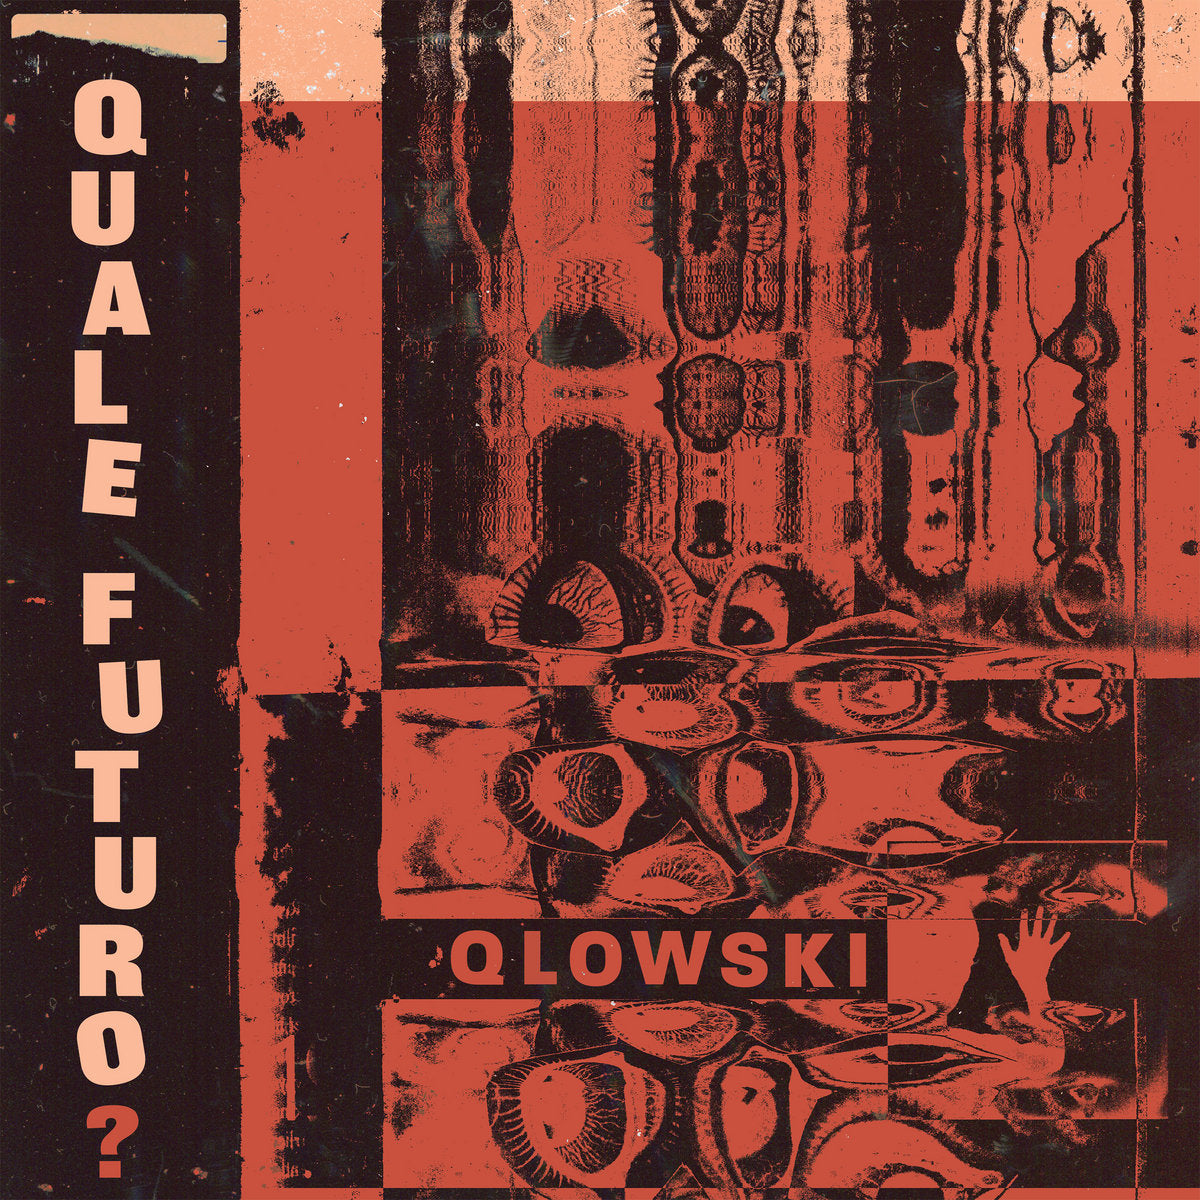 QLOWSKI - "QUALE FUTURO?" LP